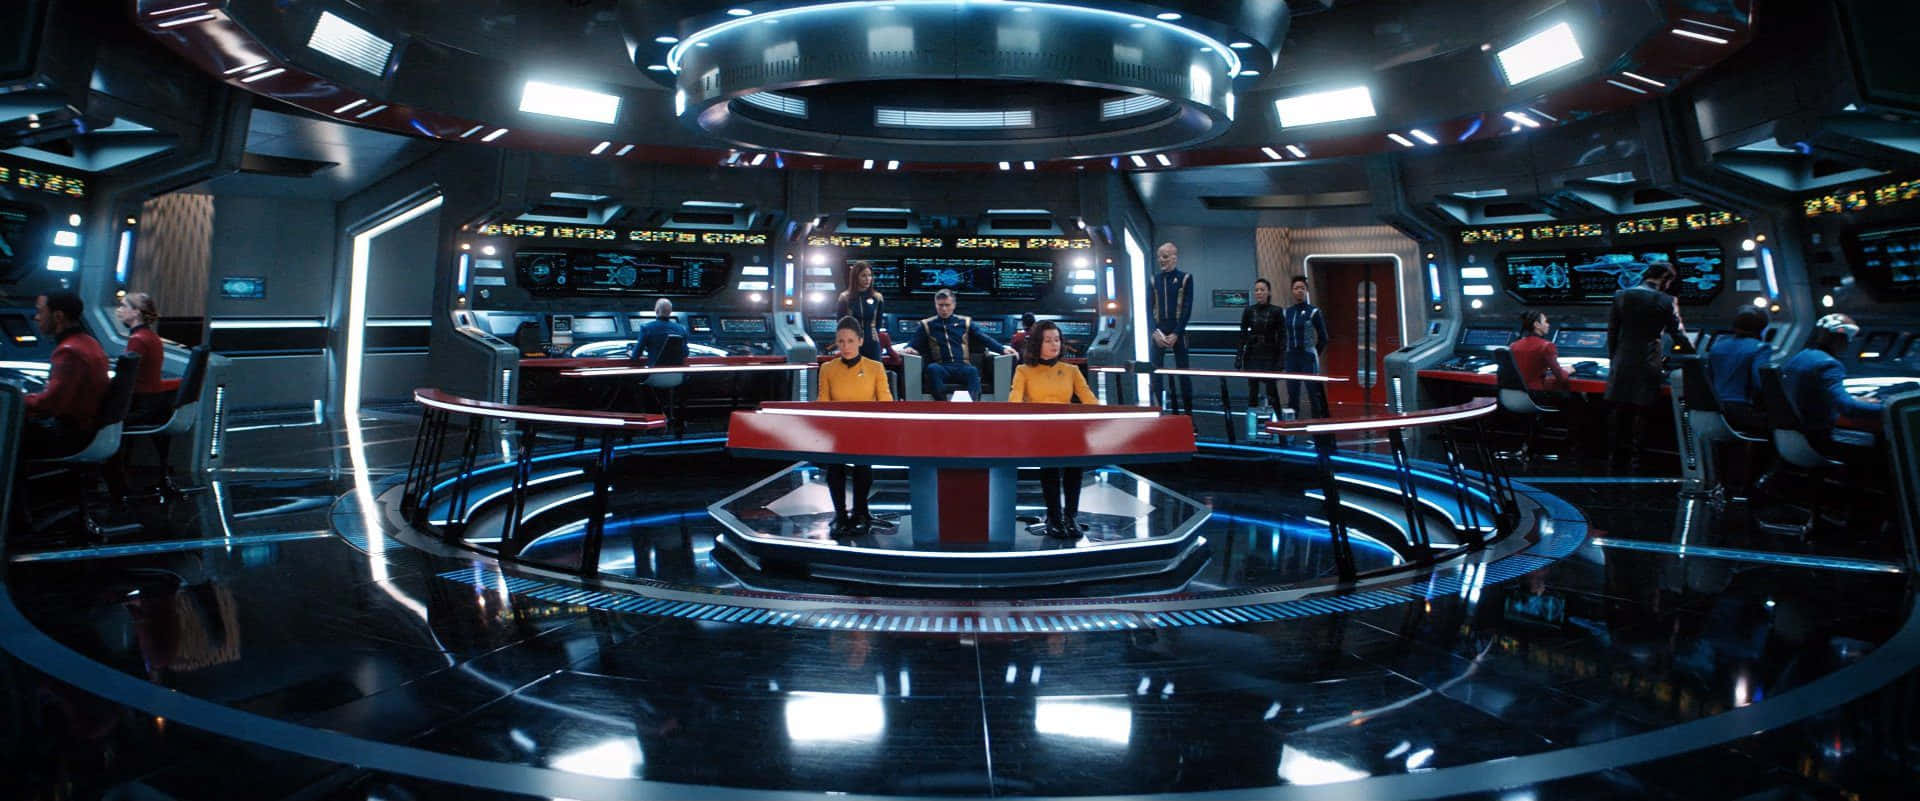 Uss Star Trek Enterprise Bridge Crew Background